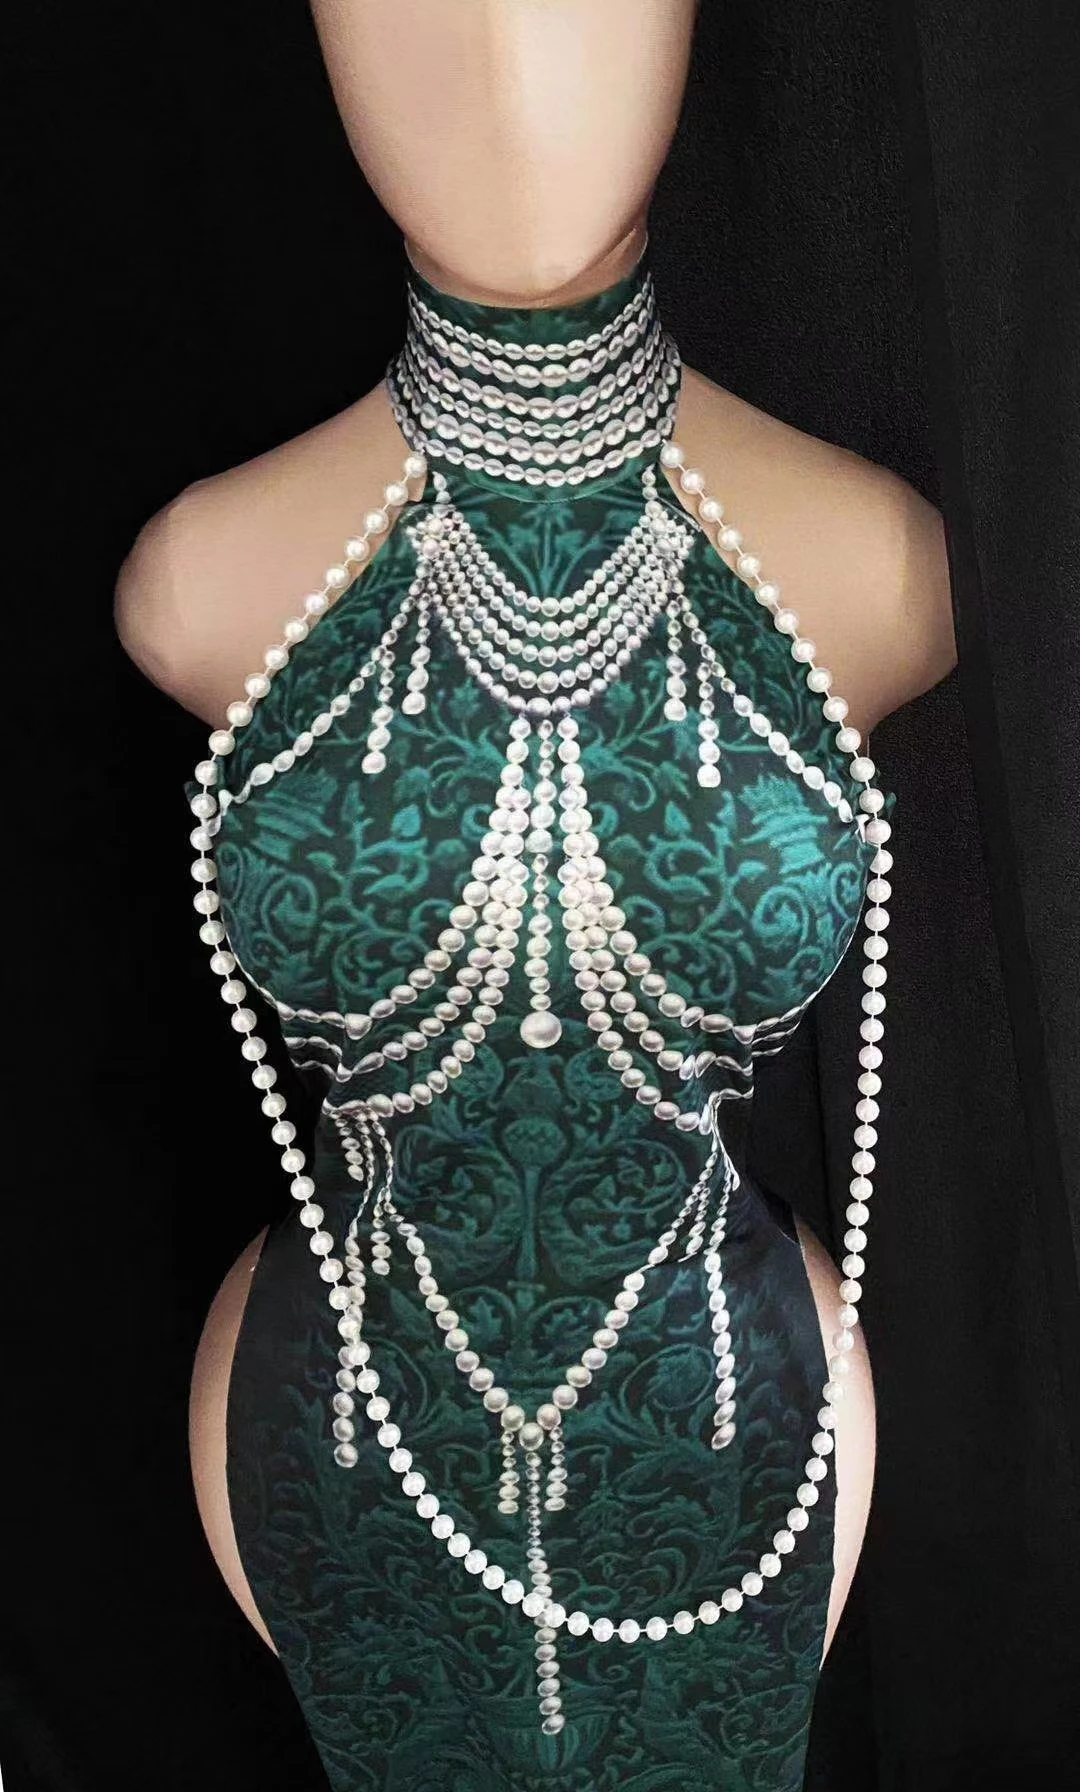 

Vintagelong dress gipao chain pearl 3DPrint high split green folk dance sleevelessPerformance stage outfit festival clothingB044